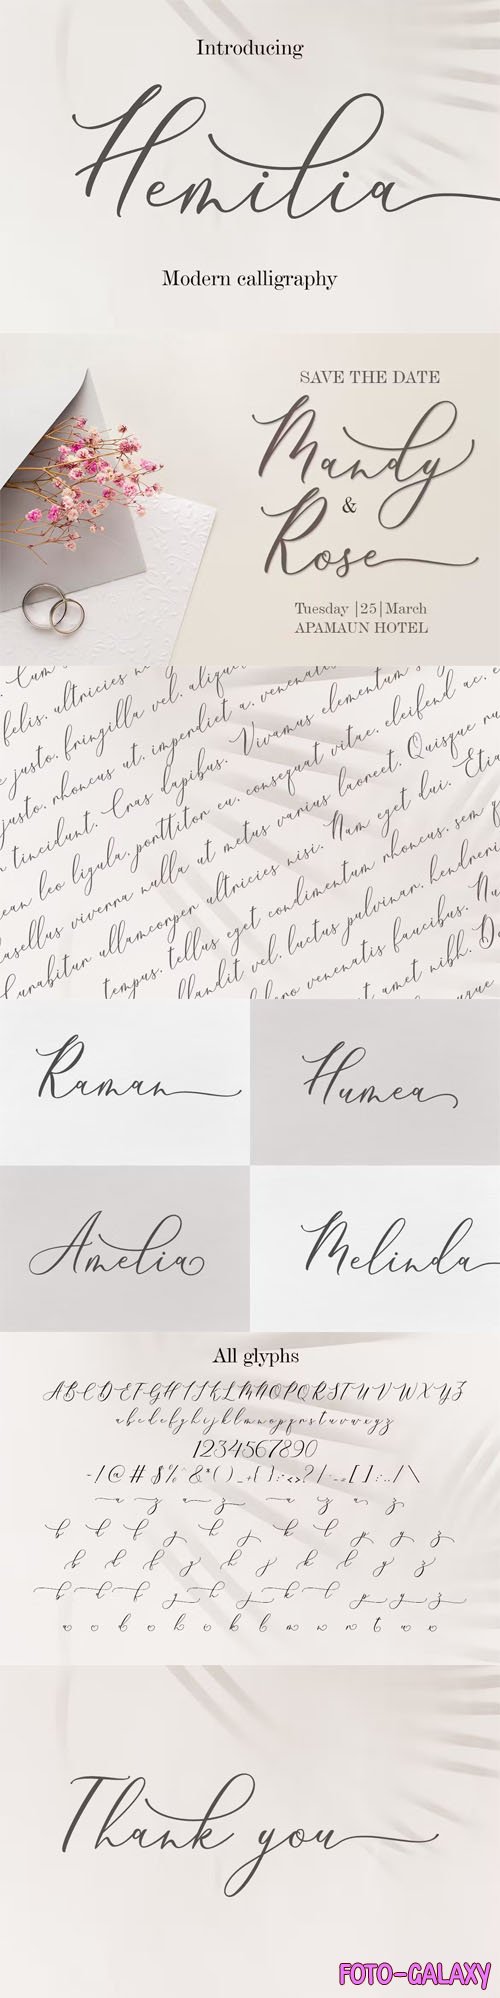 Hemilia Calligraphy Font